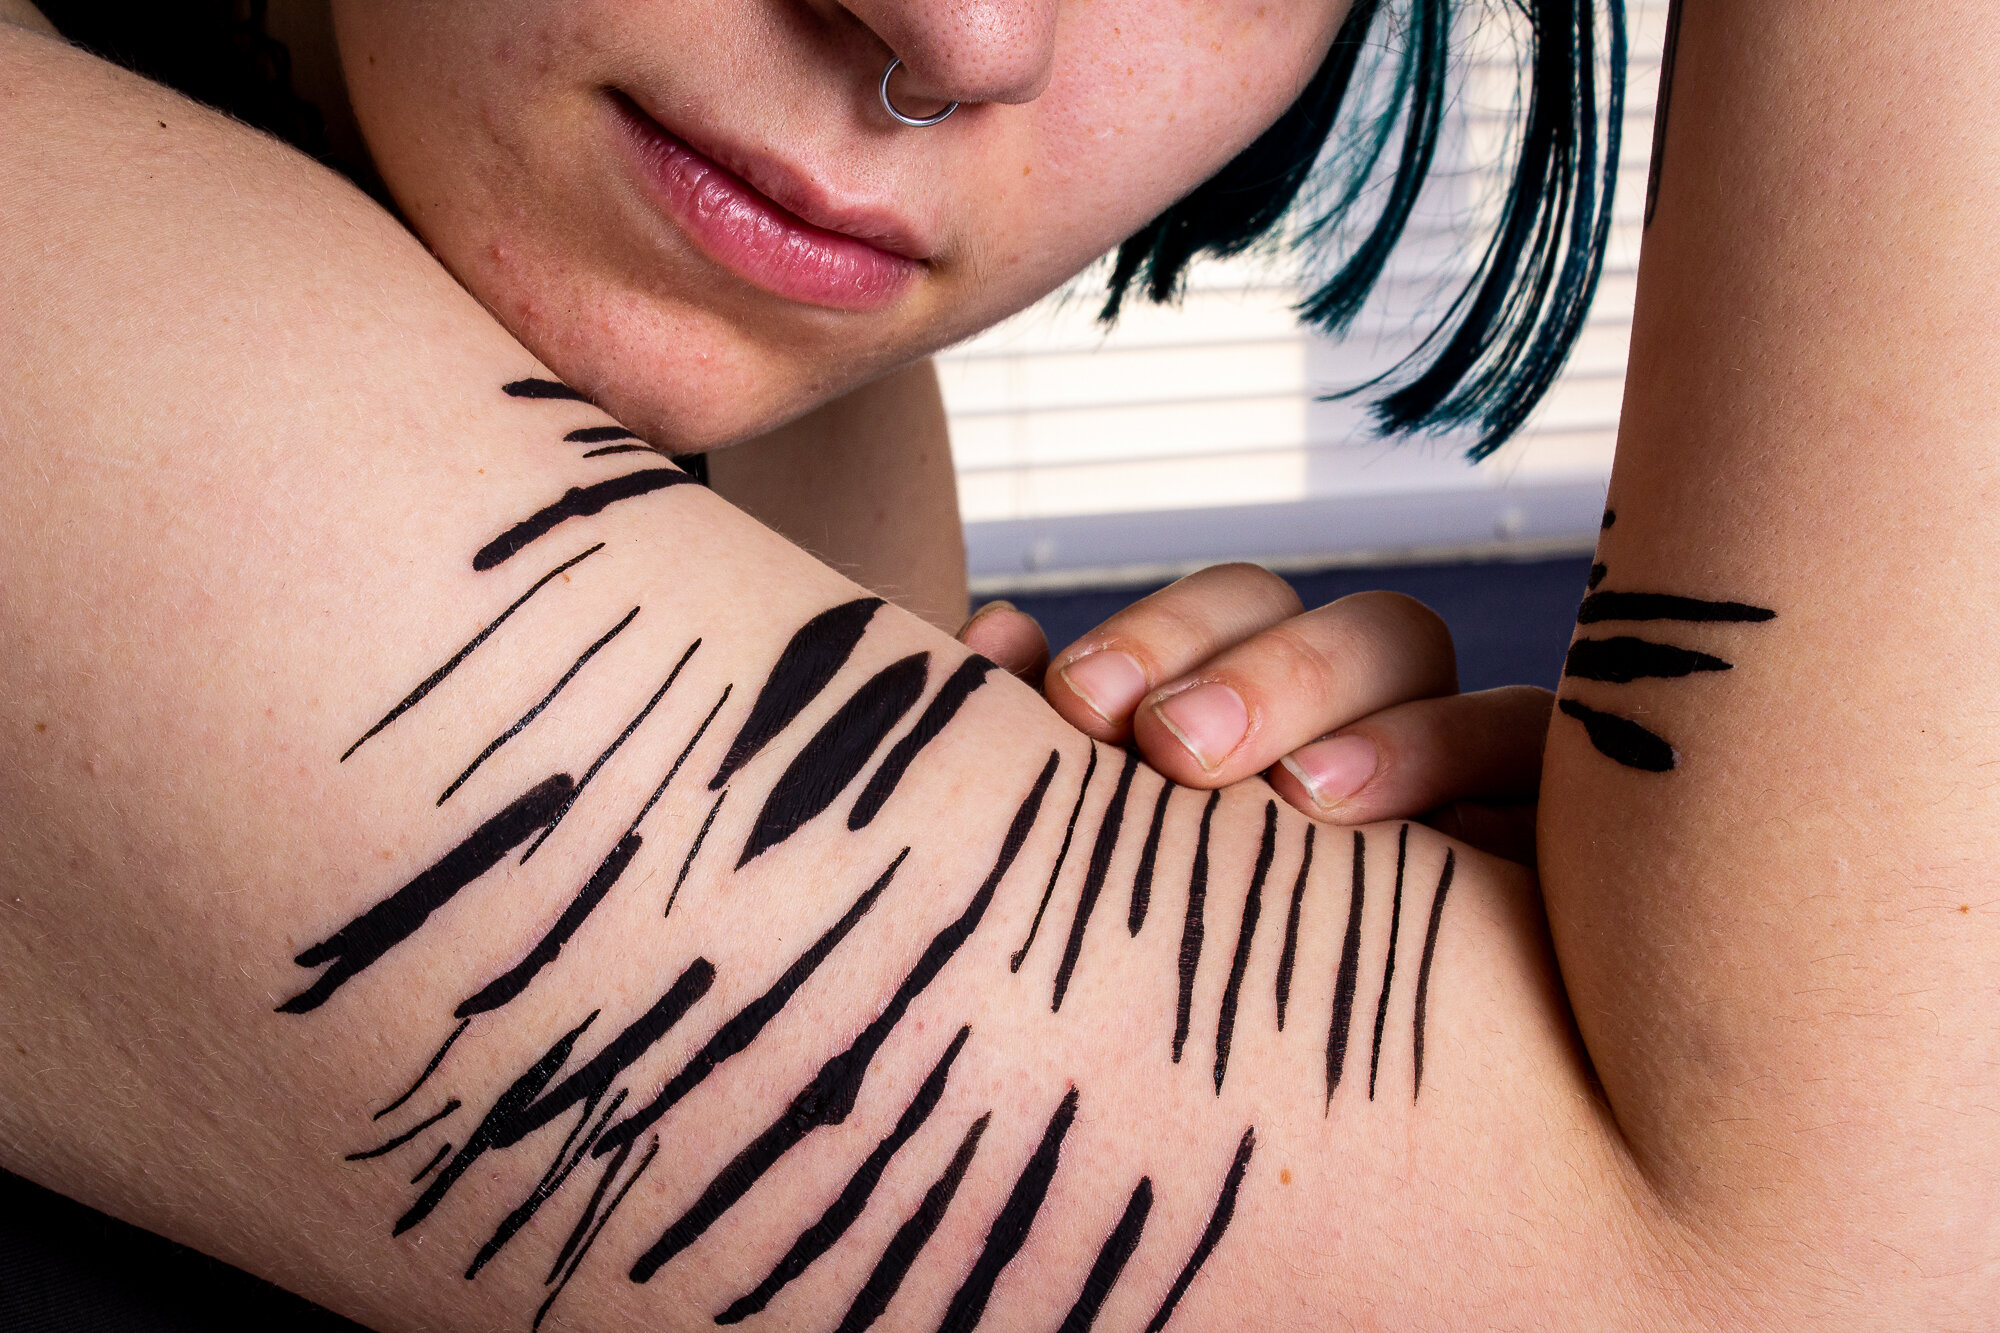  Danielle Mertens   Isabelle, 19,  2020  From the series: (in)visible scars  Digital Inkjet Print  